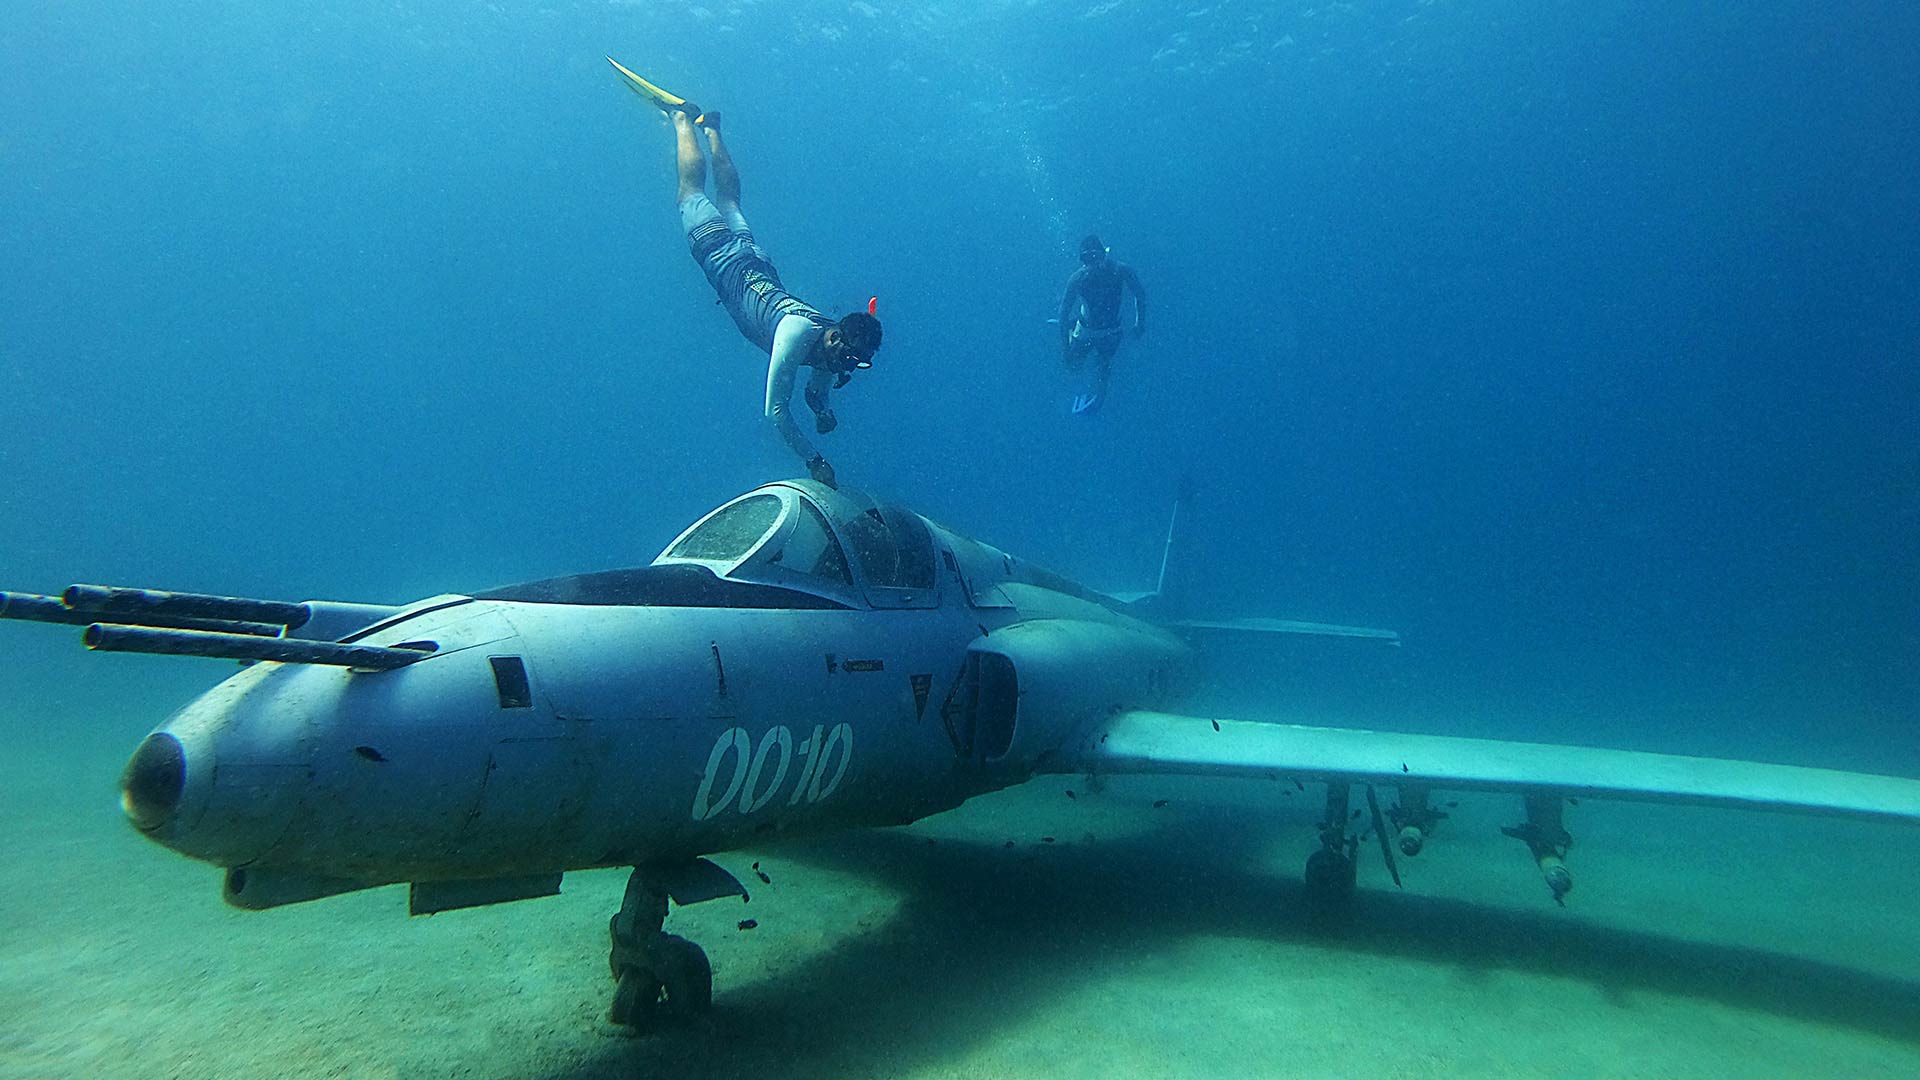 Military plane under the sea